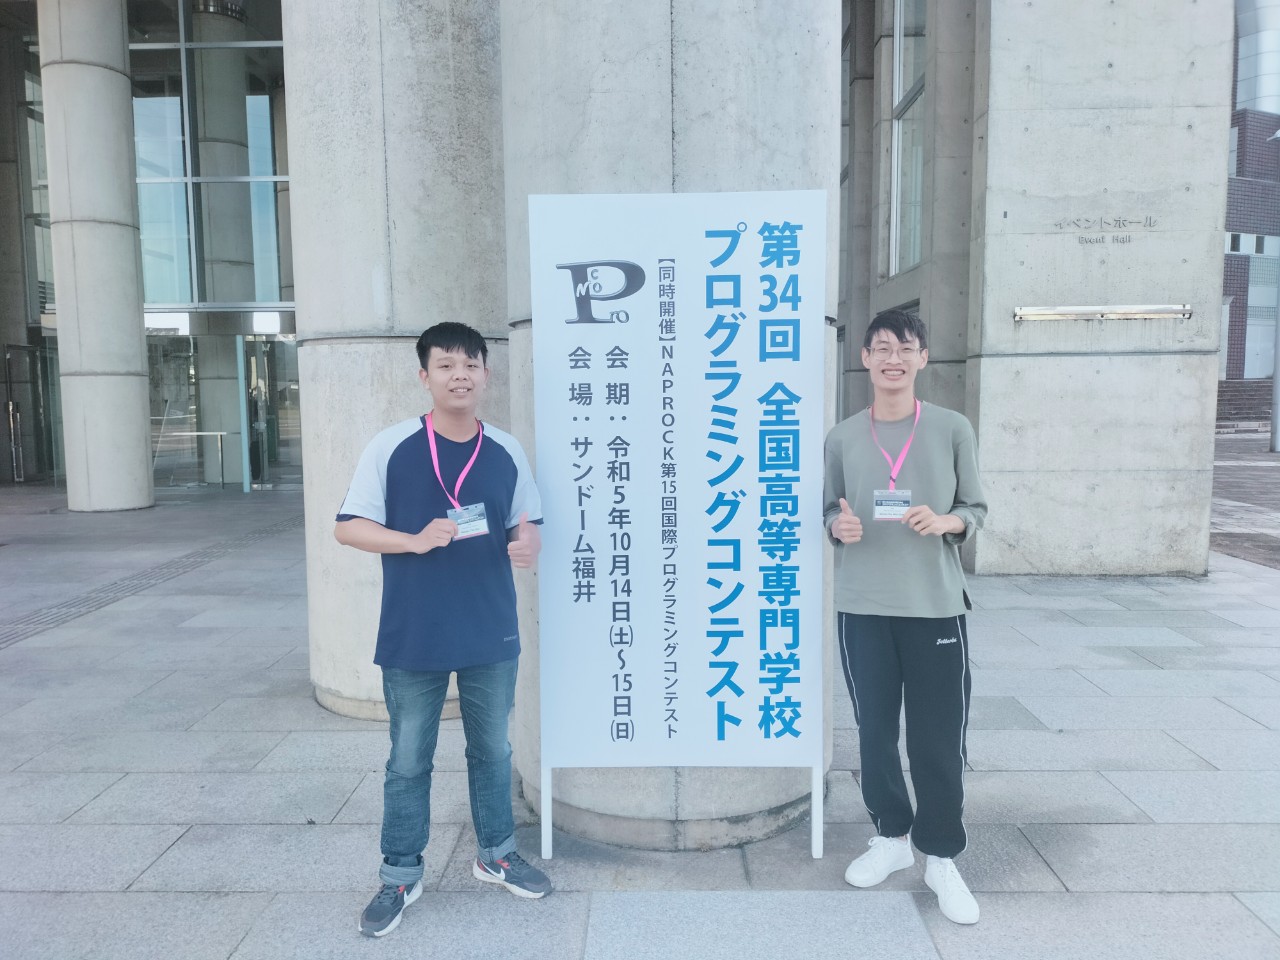 VN.HaUI_Miuxinhhh shines at the 15th Naprock International Programming Contest in Japan